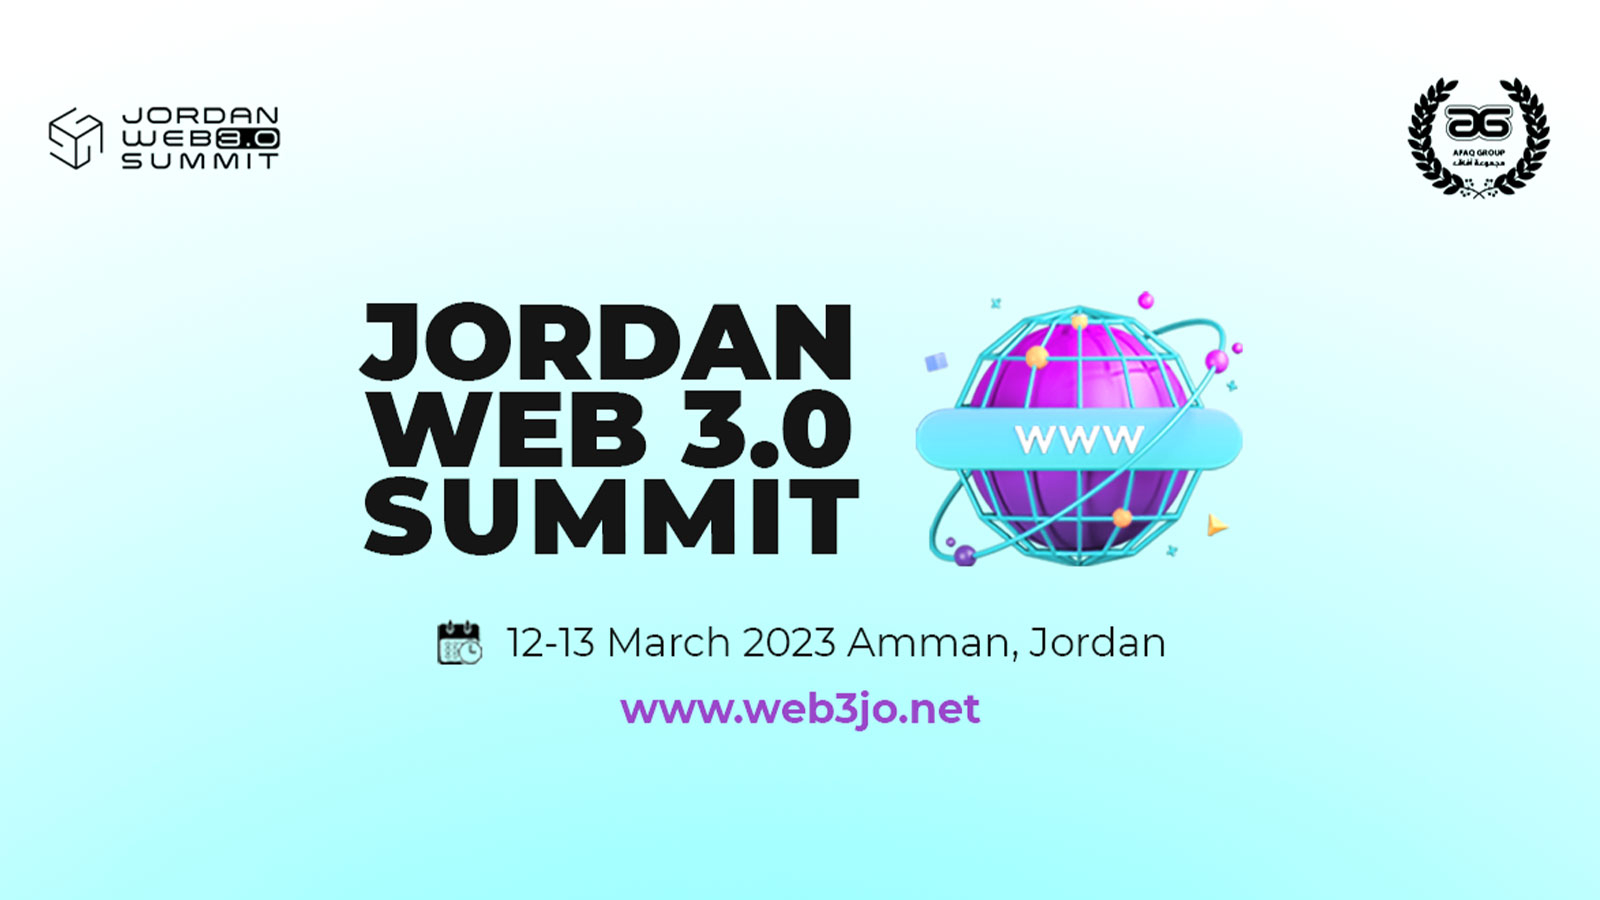 Jordan Web 3.0 Summit to Take Place on March 12-13, 2023